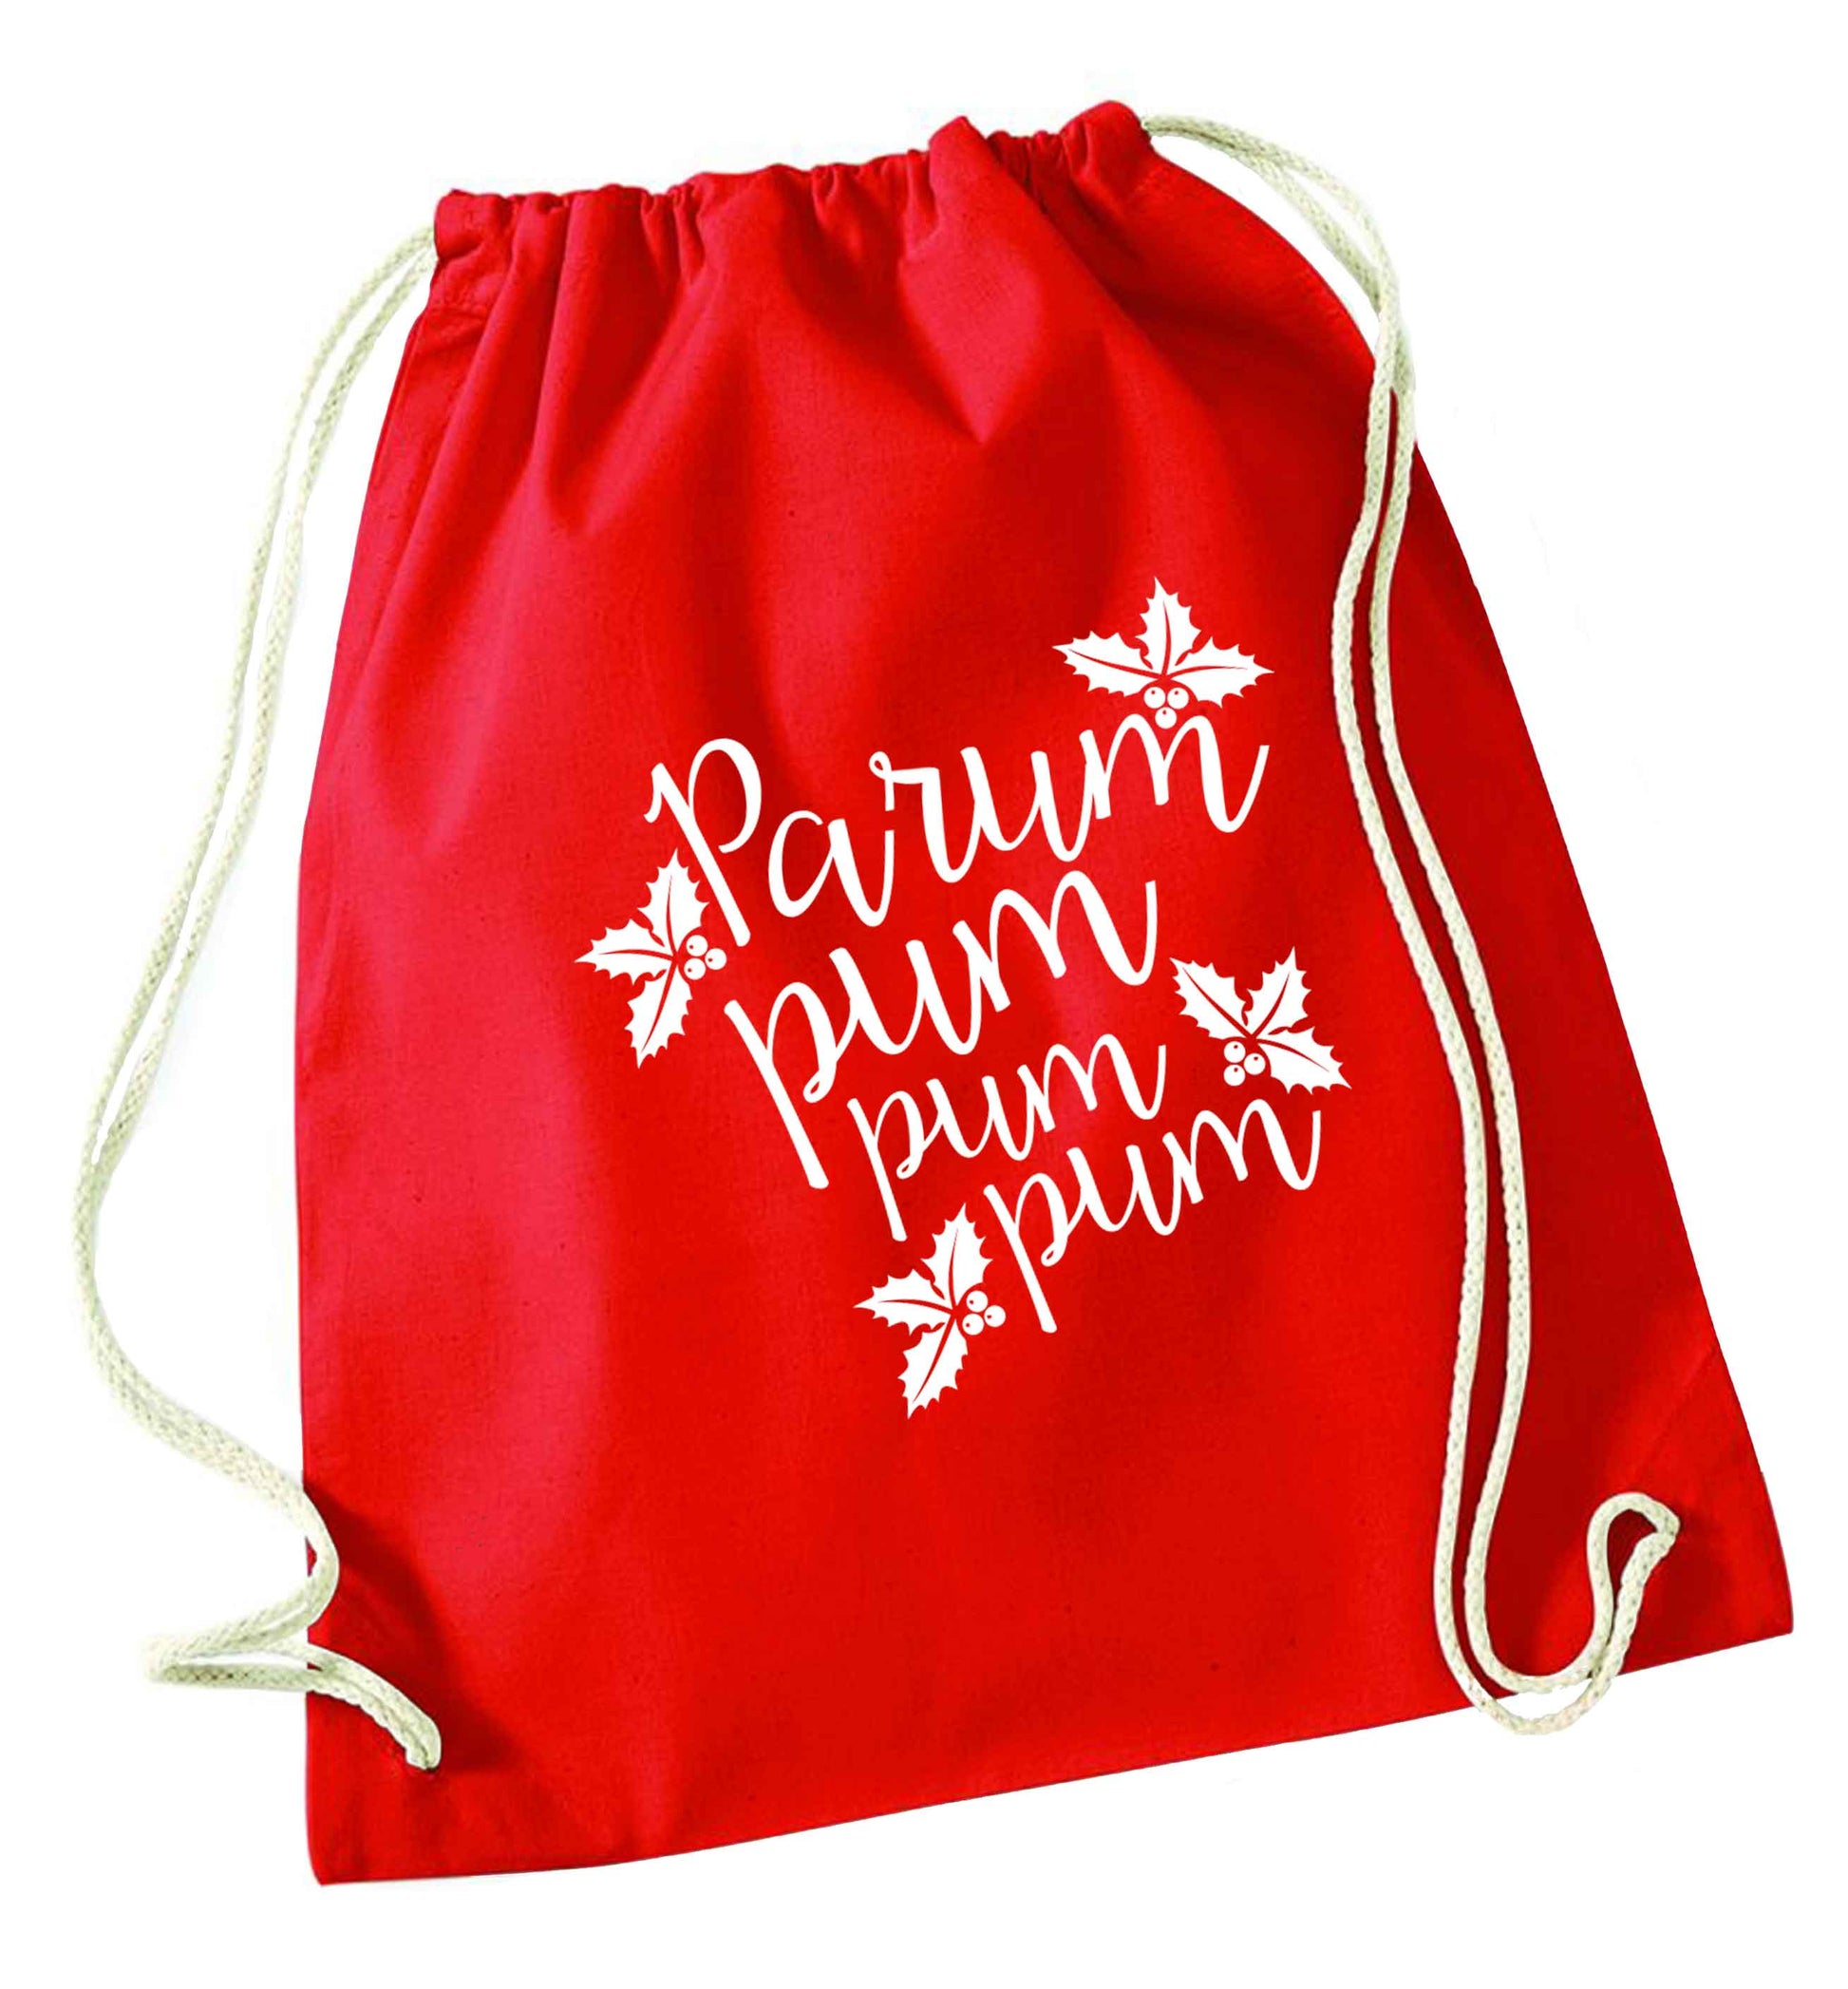 Pa rum pum pum pum red drawstring bag 